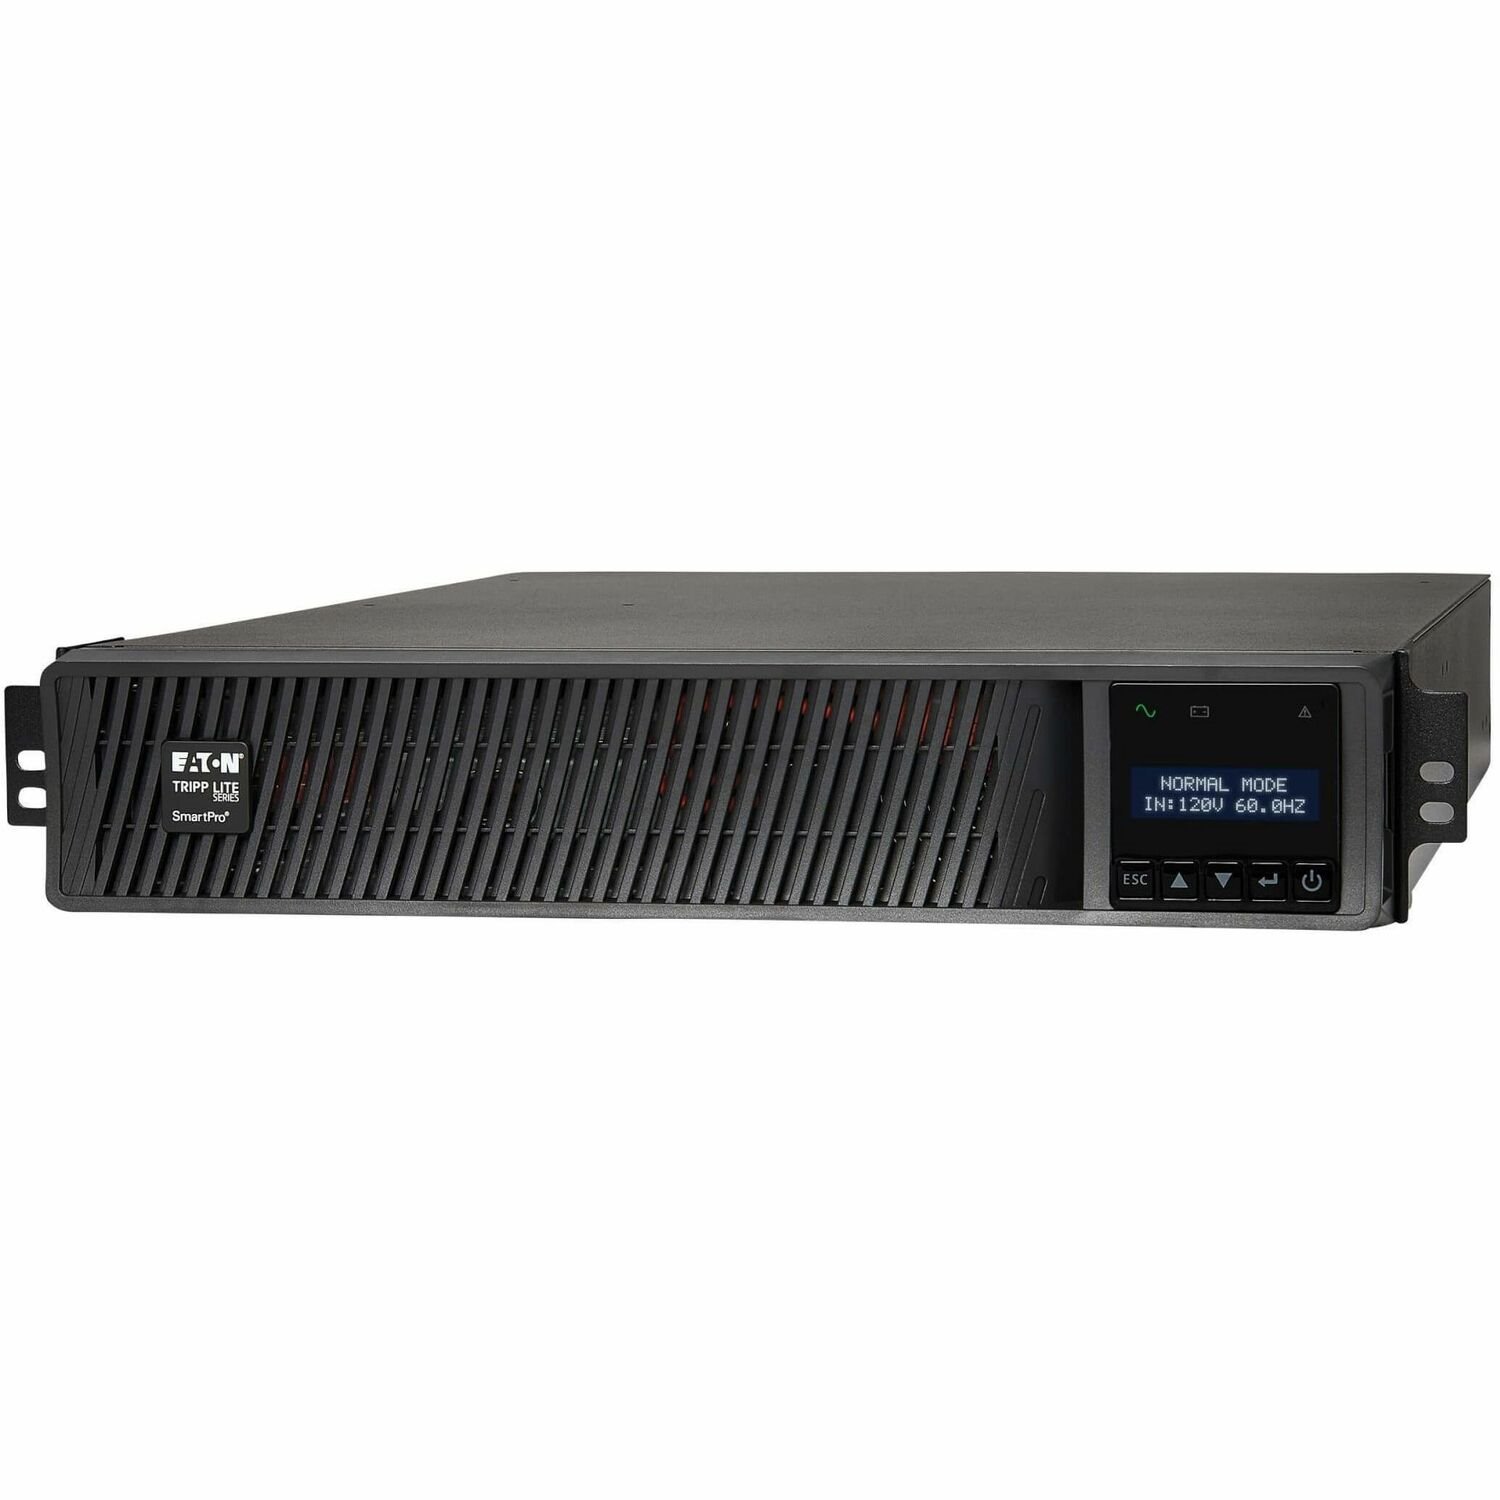 Eaton Tripp Lite Series SmartPro 3000VA 3000W 120V Line-Interactive Sine Wave UPS - 7 Outlets, Extended Run, Network Card Option, LCD, USB, DB9, 2U Rack/Tower, TAA